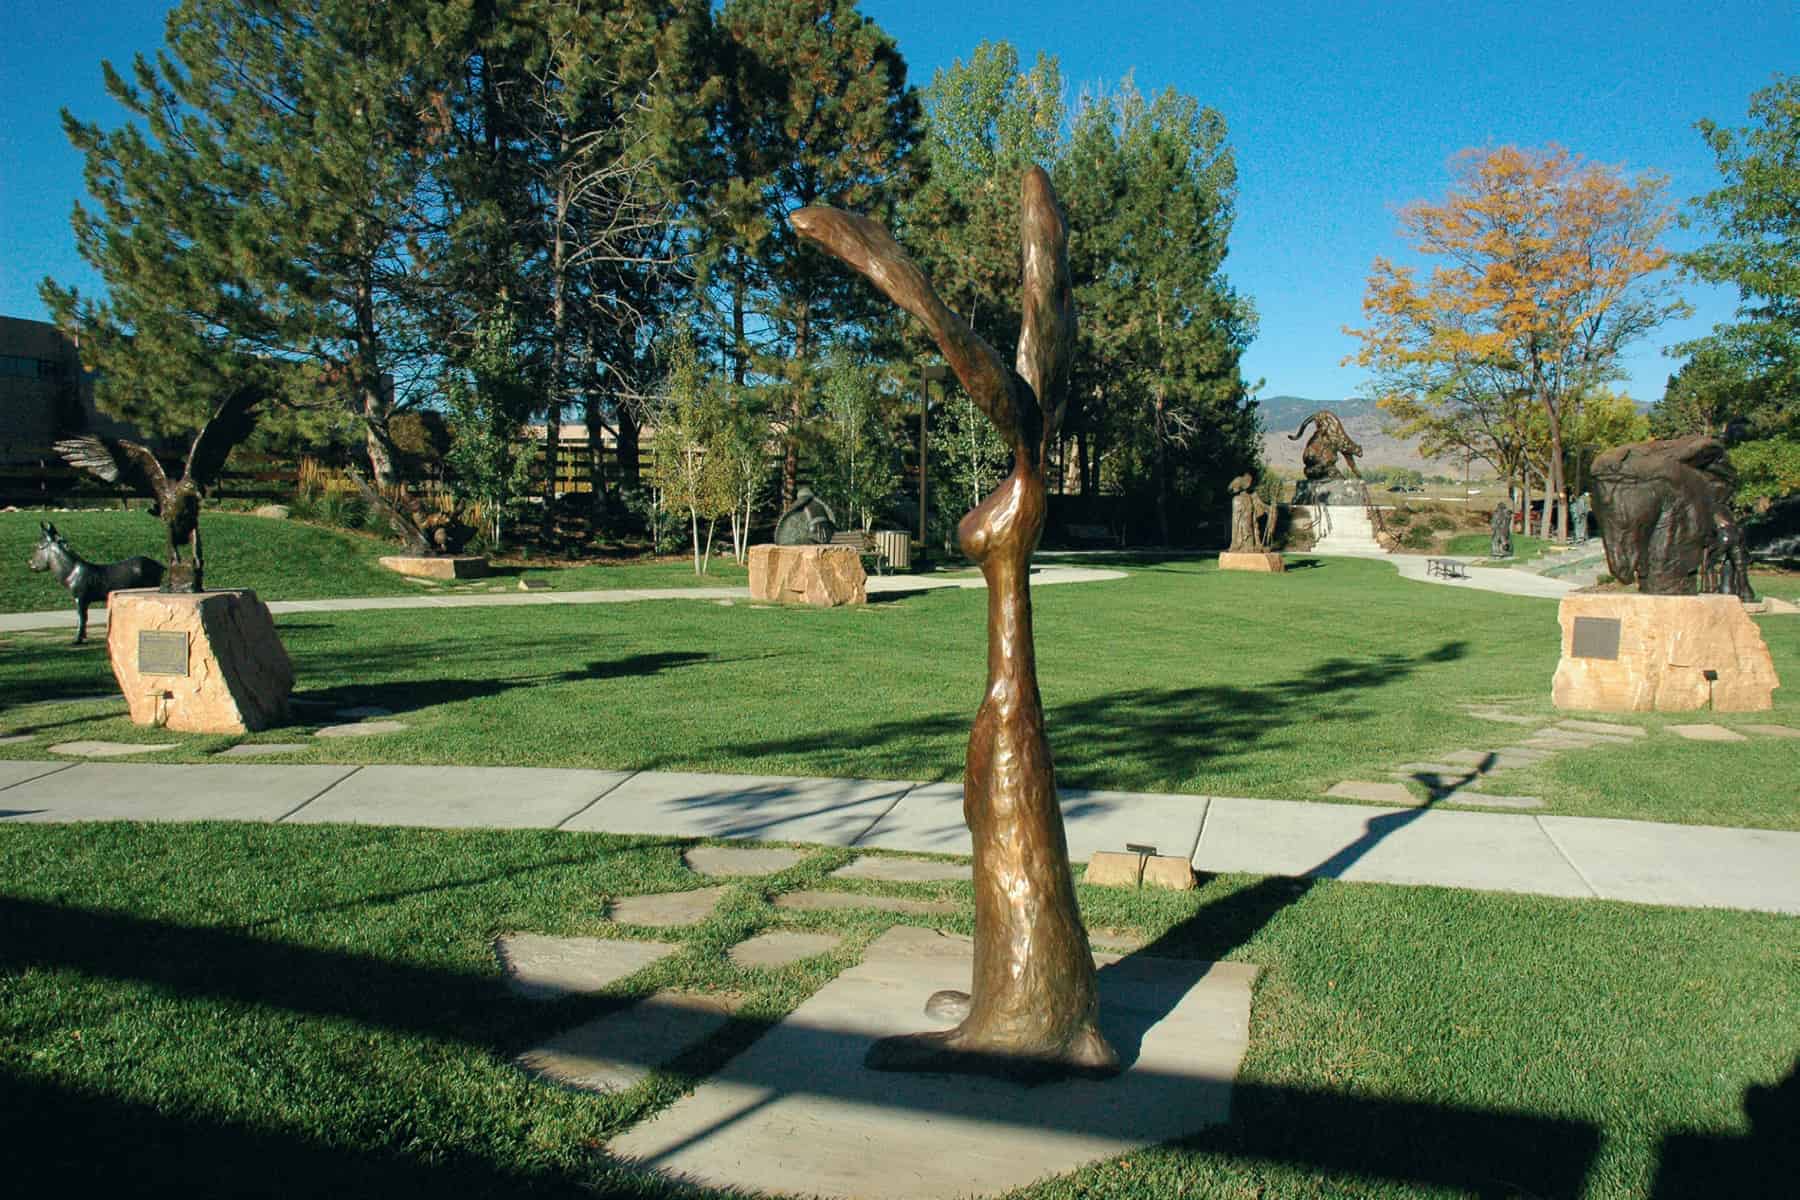 Leanin’ Tree Museum & Sculpture Garden